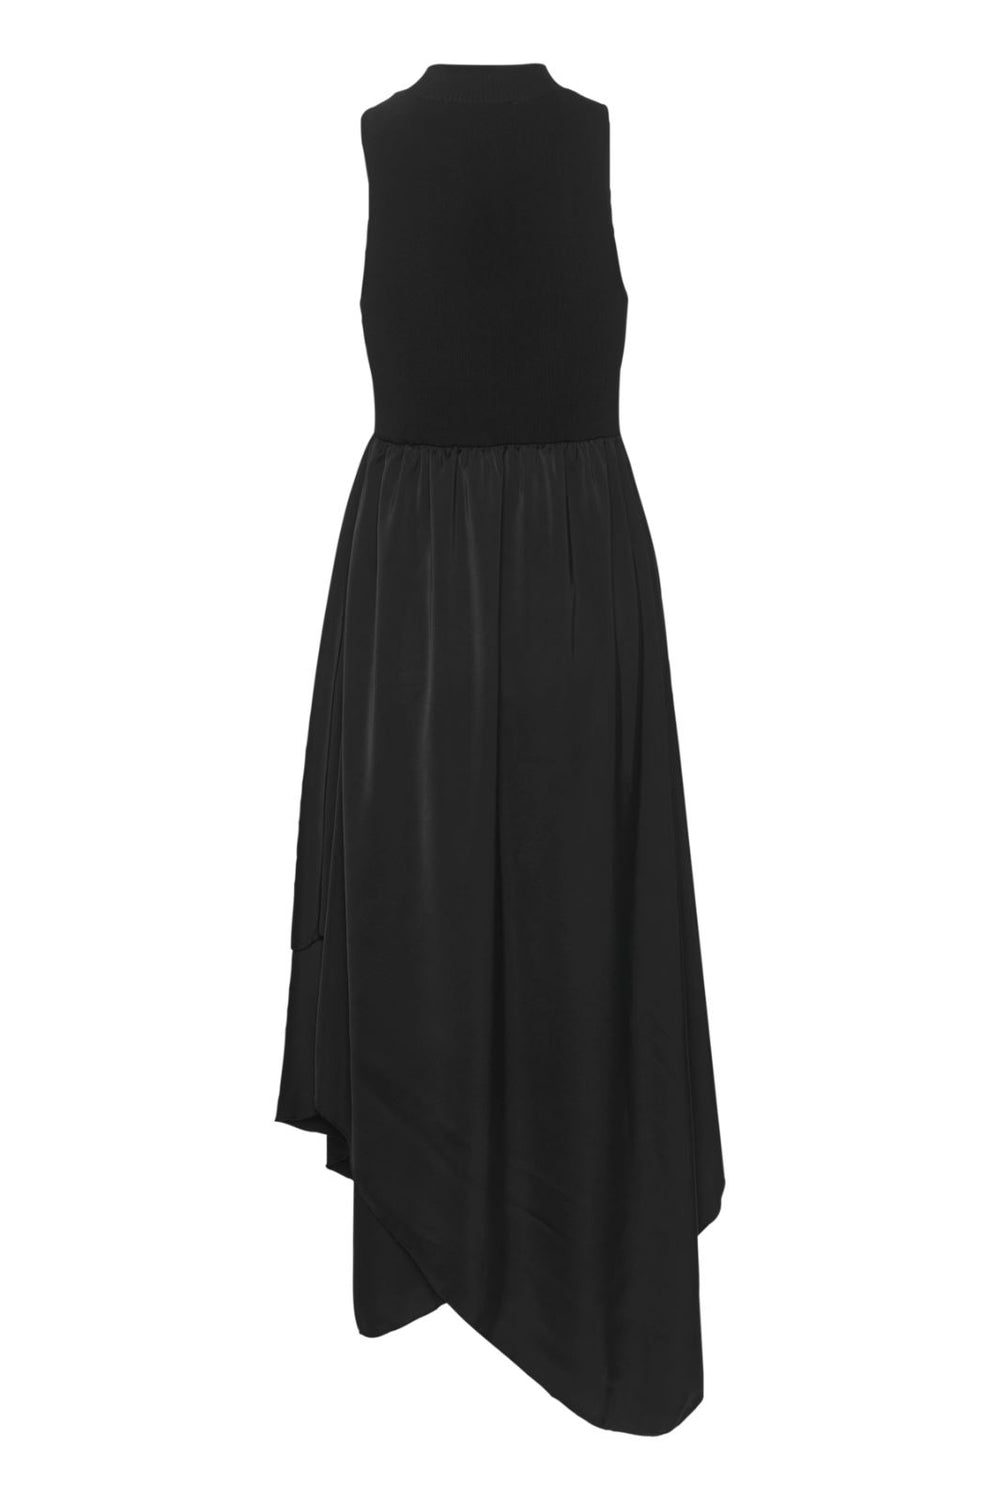 Gestuz - PamaGZ SL dress - Black Kjoler 